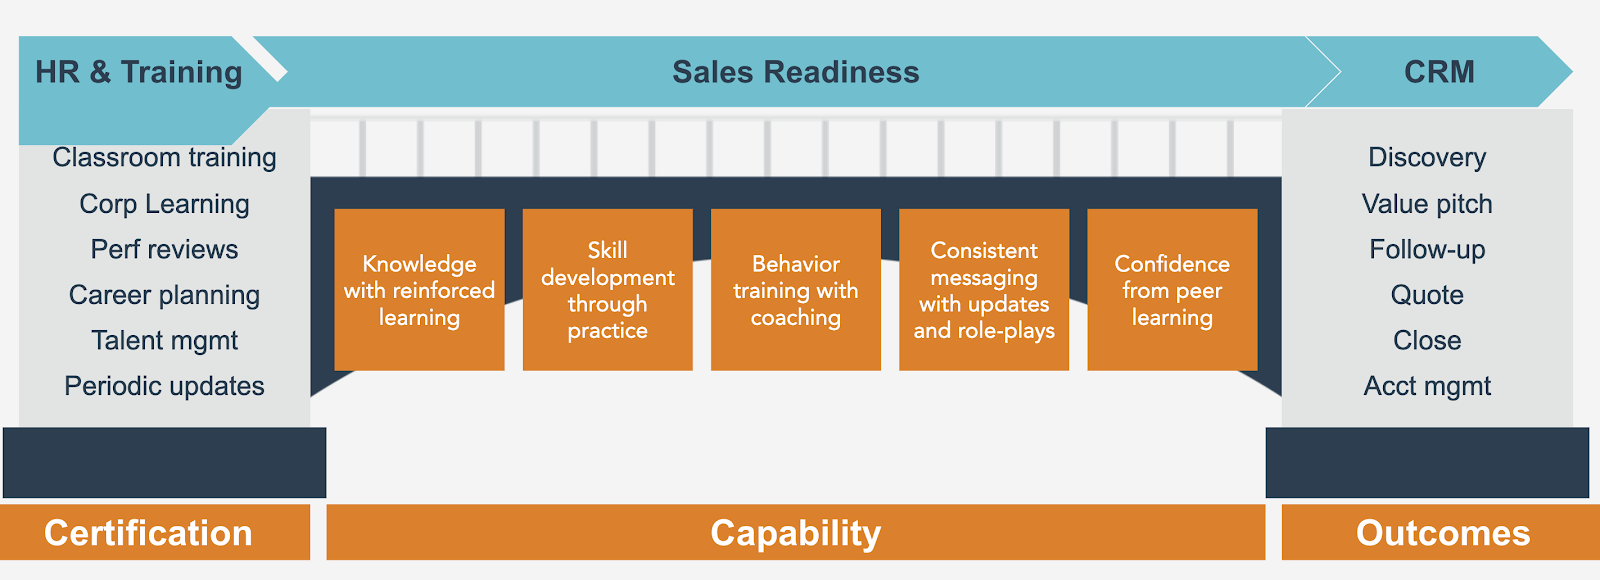 Sales readiness infographic